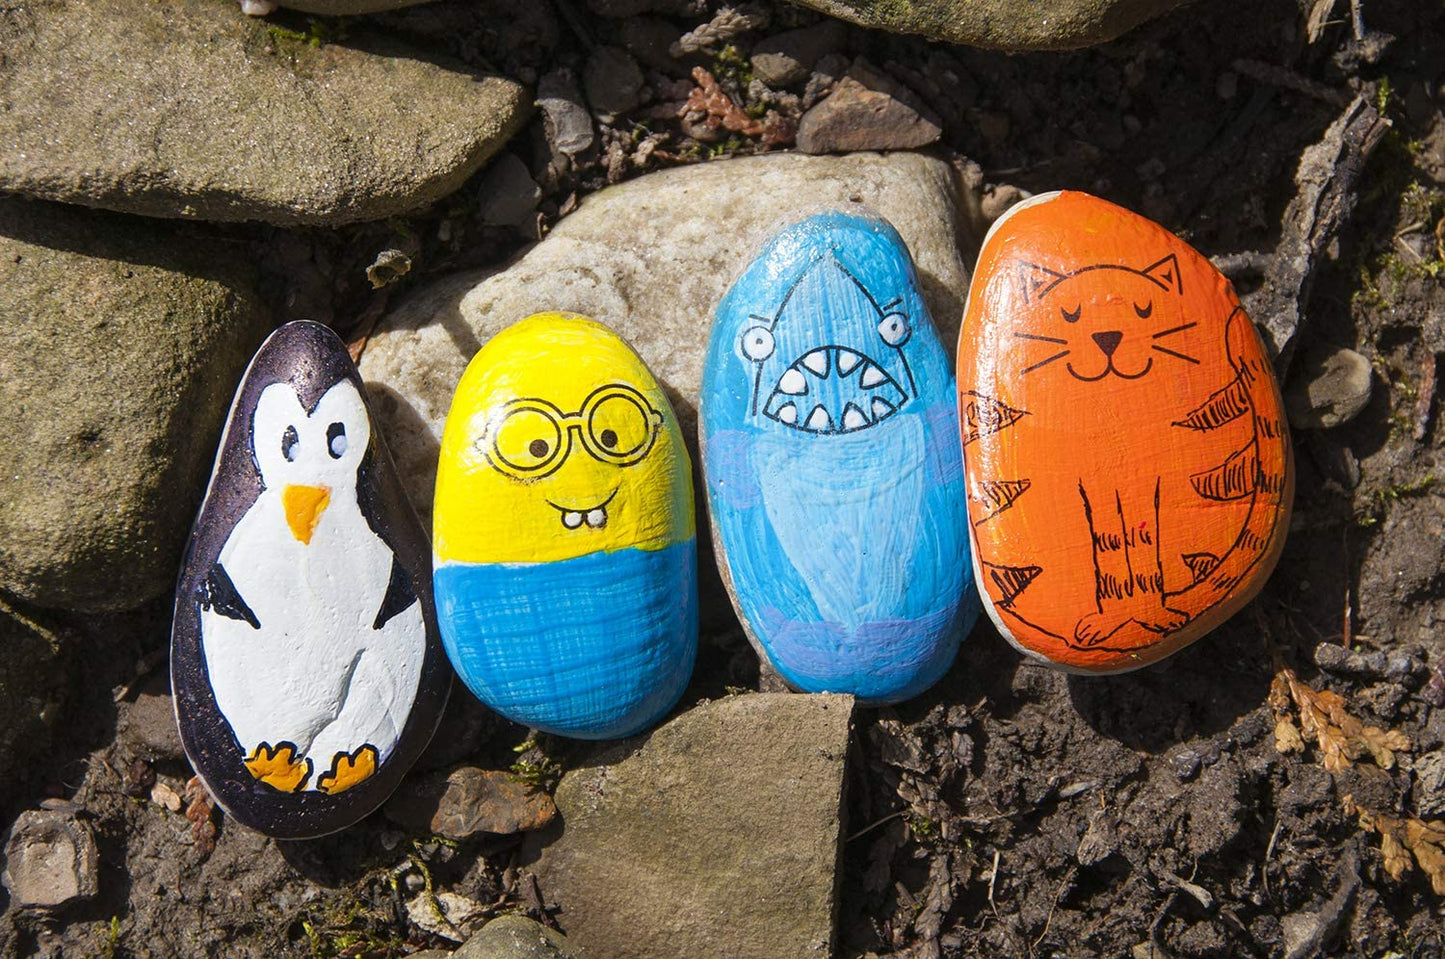 Creativity for Kids Hide & Seek Rock Painting Kit - Arts & Crafts For Kids - Includes Rocks & Waterproof Paint